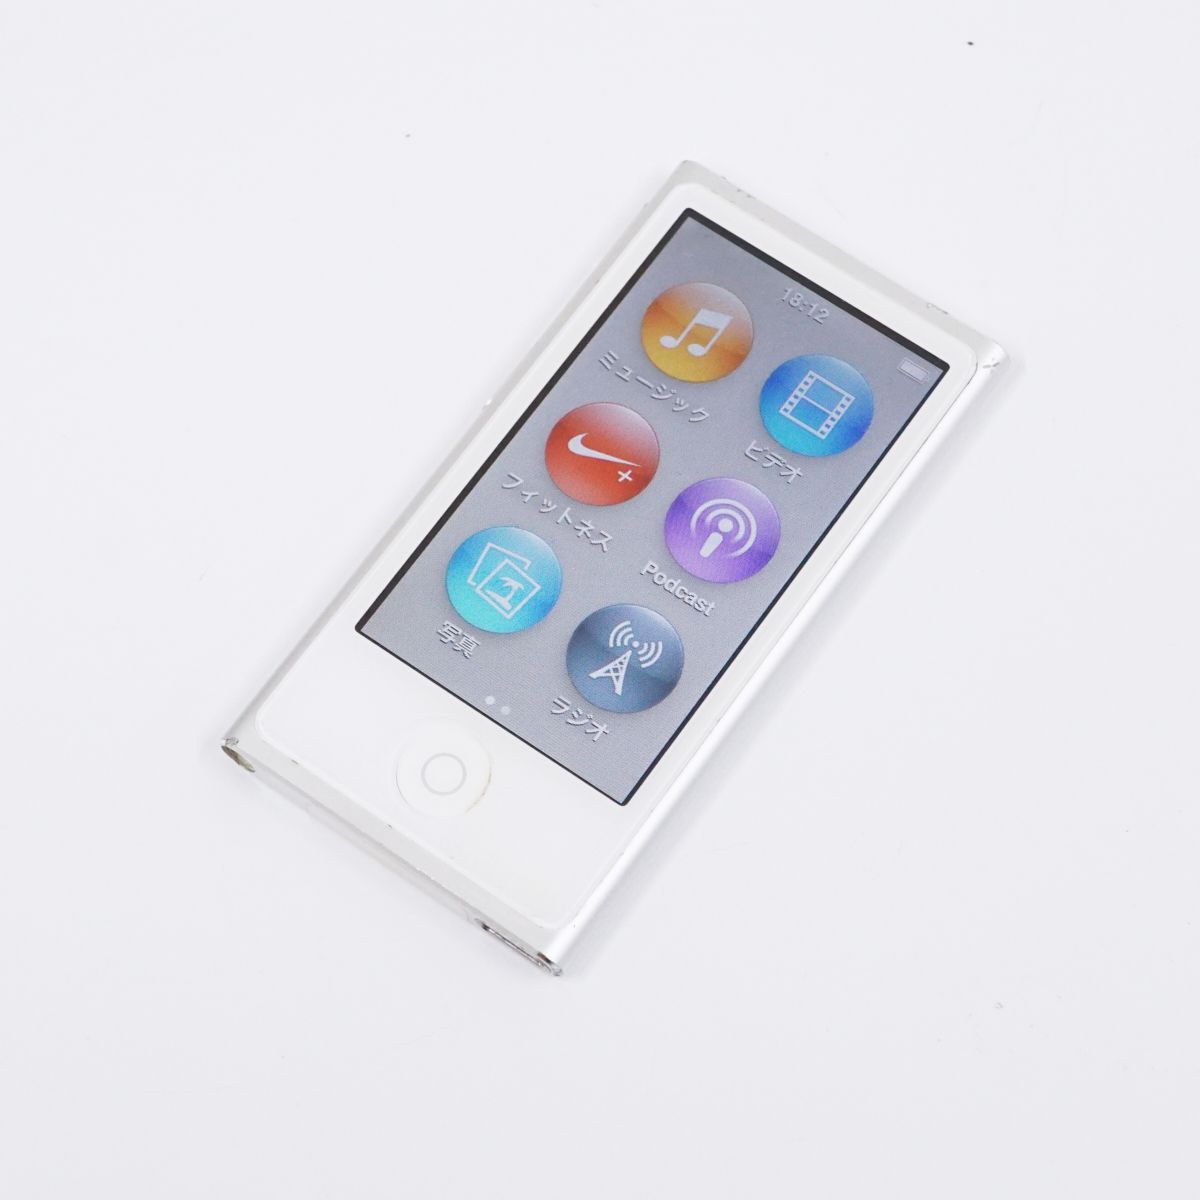 iPod nano A1446 MD480J